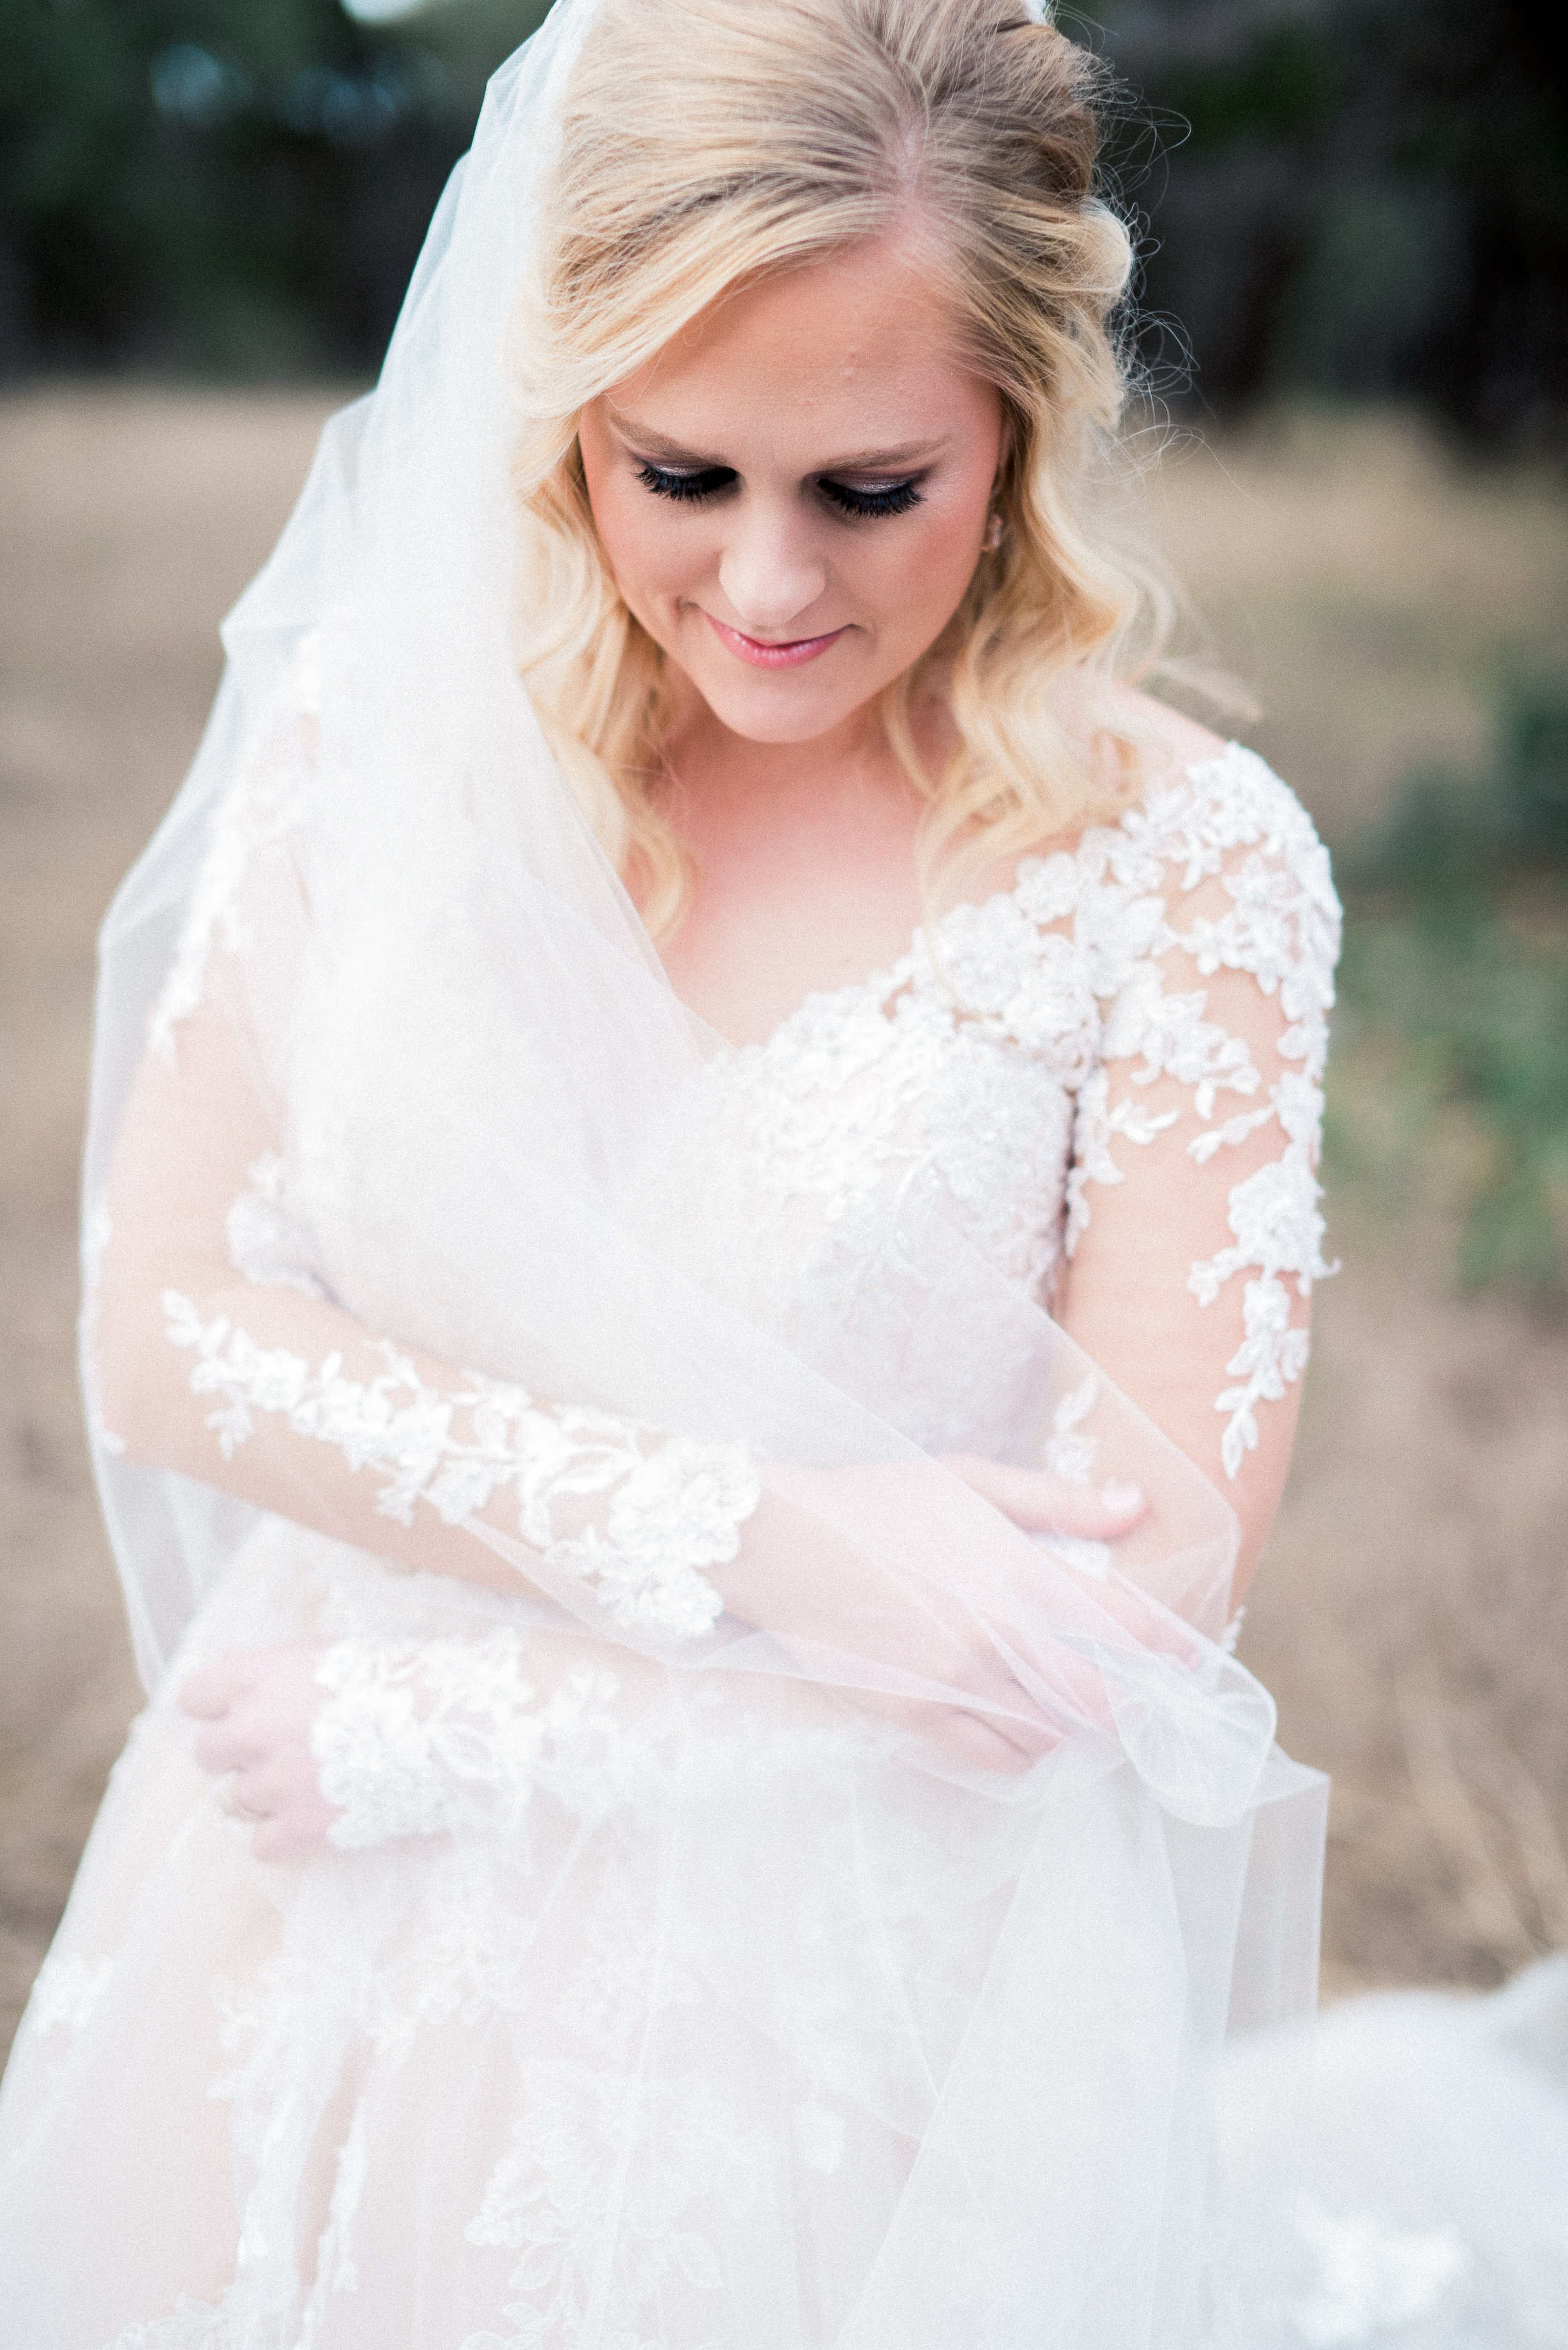 Rustic, Romantic Branded T Ranch Styled Wedding - Burgundy Wine Blush Wedding -- Brittany Jean Photography -- Wedding Blog - The Overwhelmed Bride